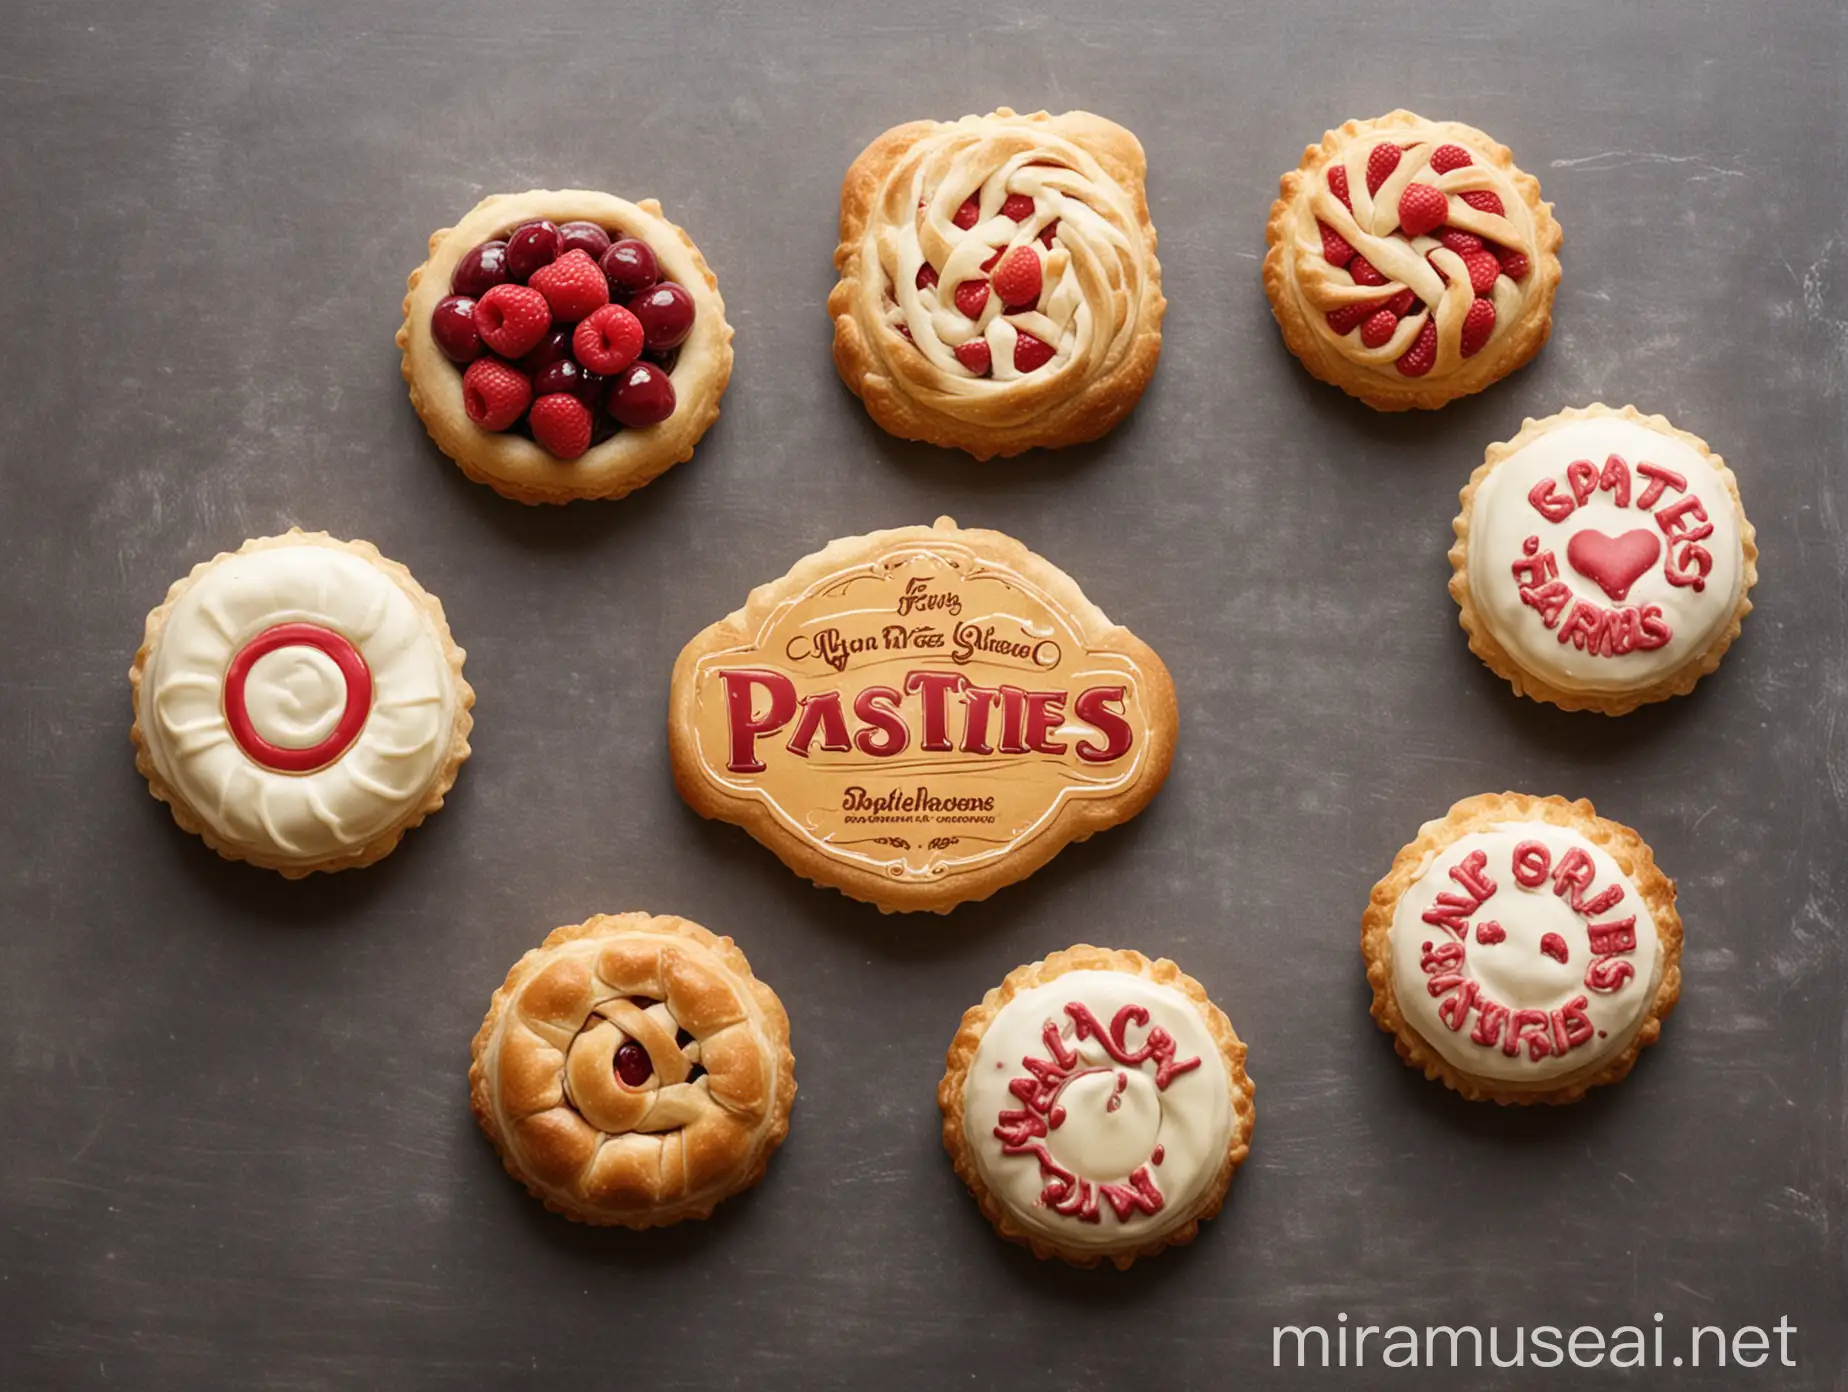 make a logo the logo name Fun-Tastic Pastries